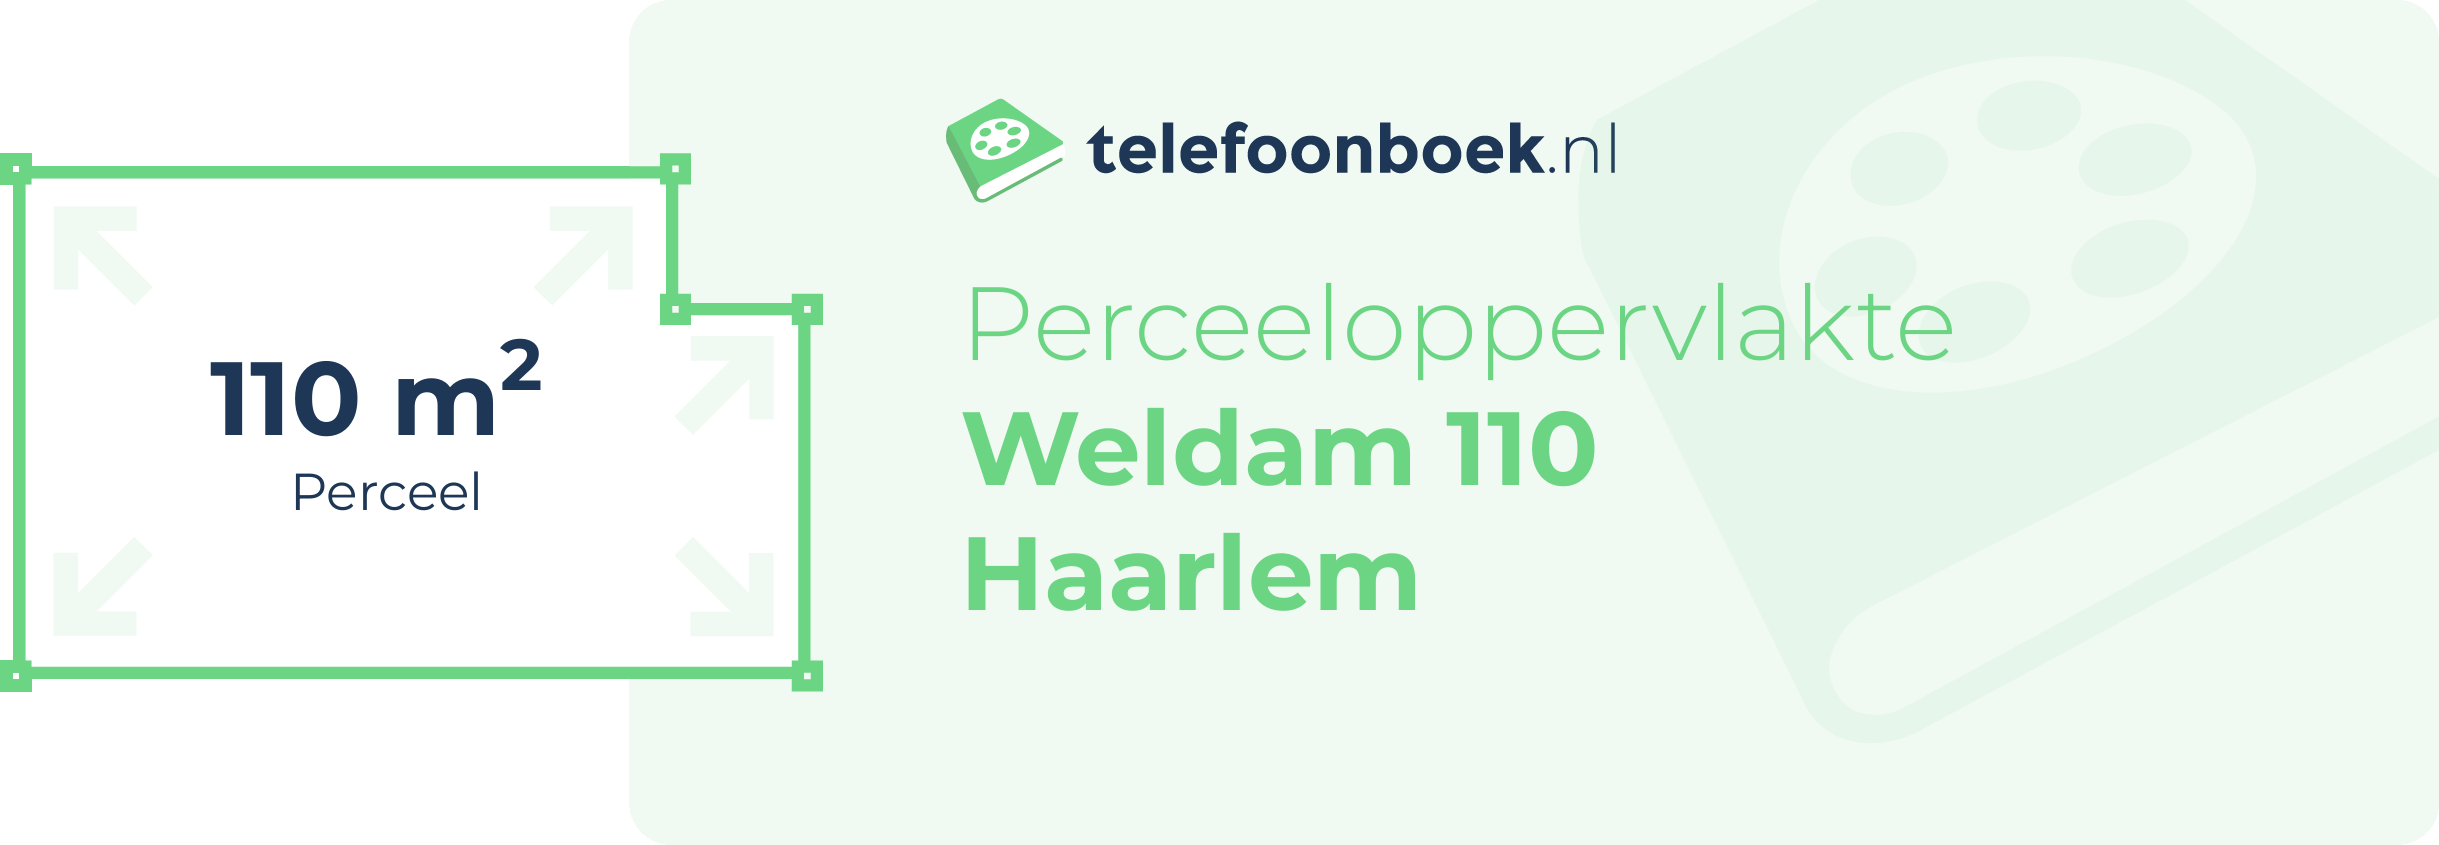 Perceeloppervlakte Weldam 110 Haarlem